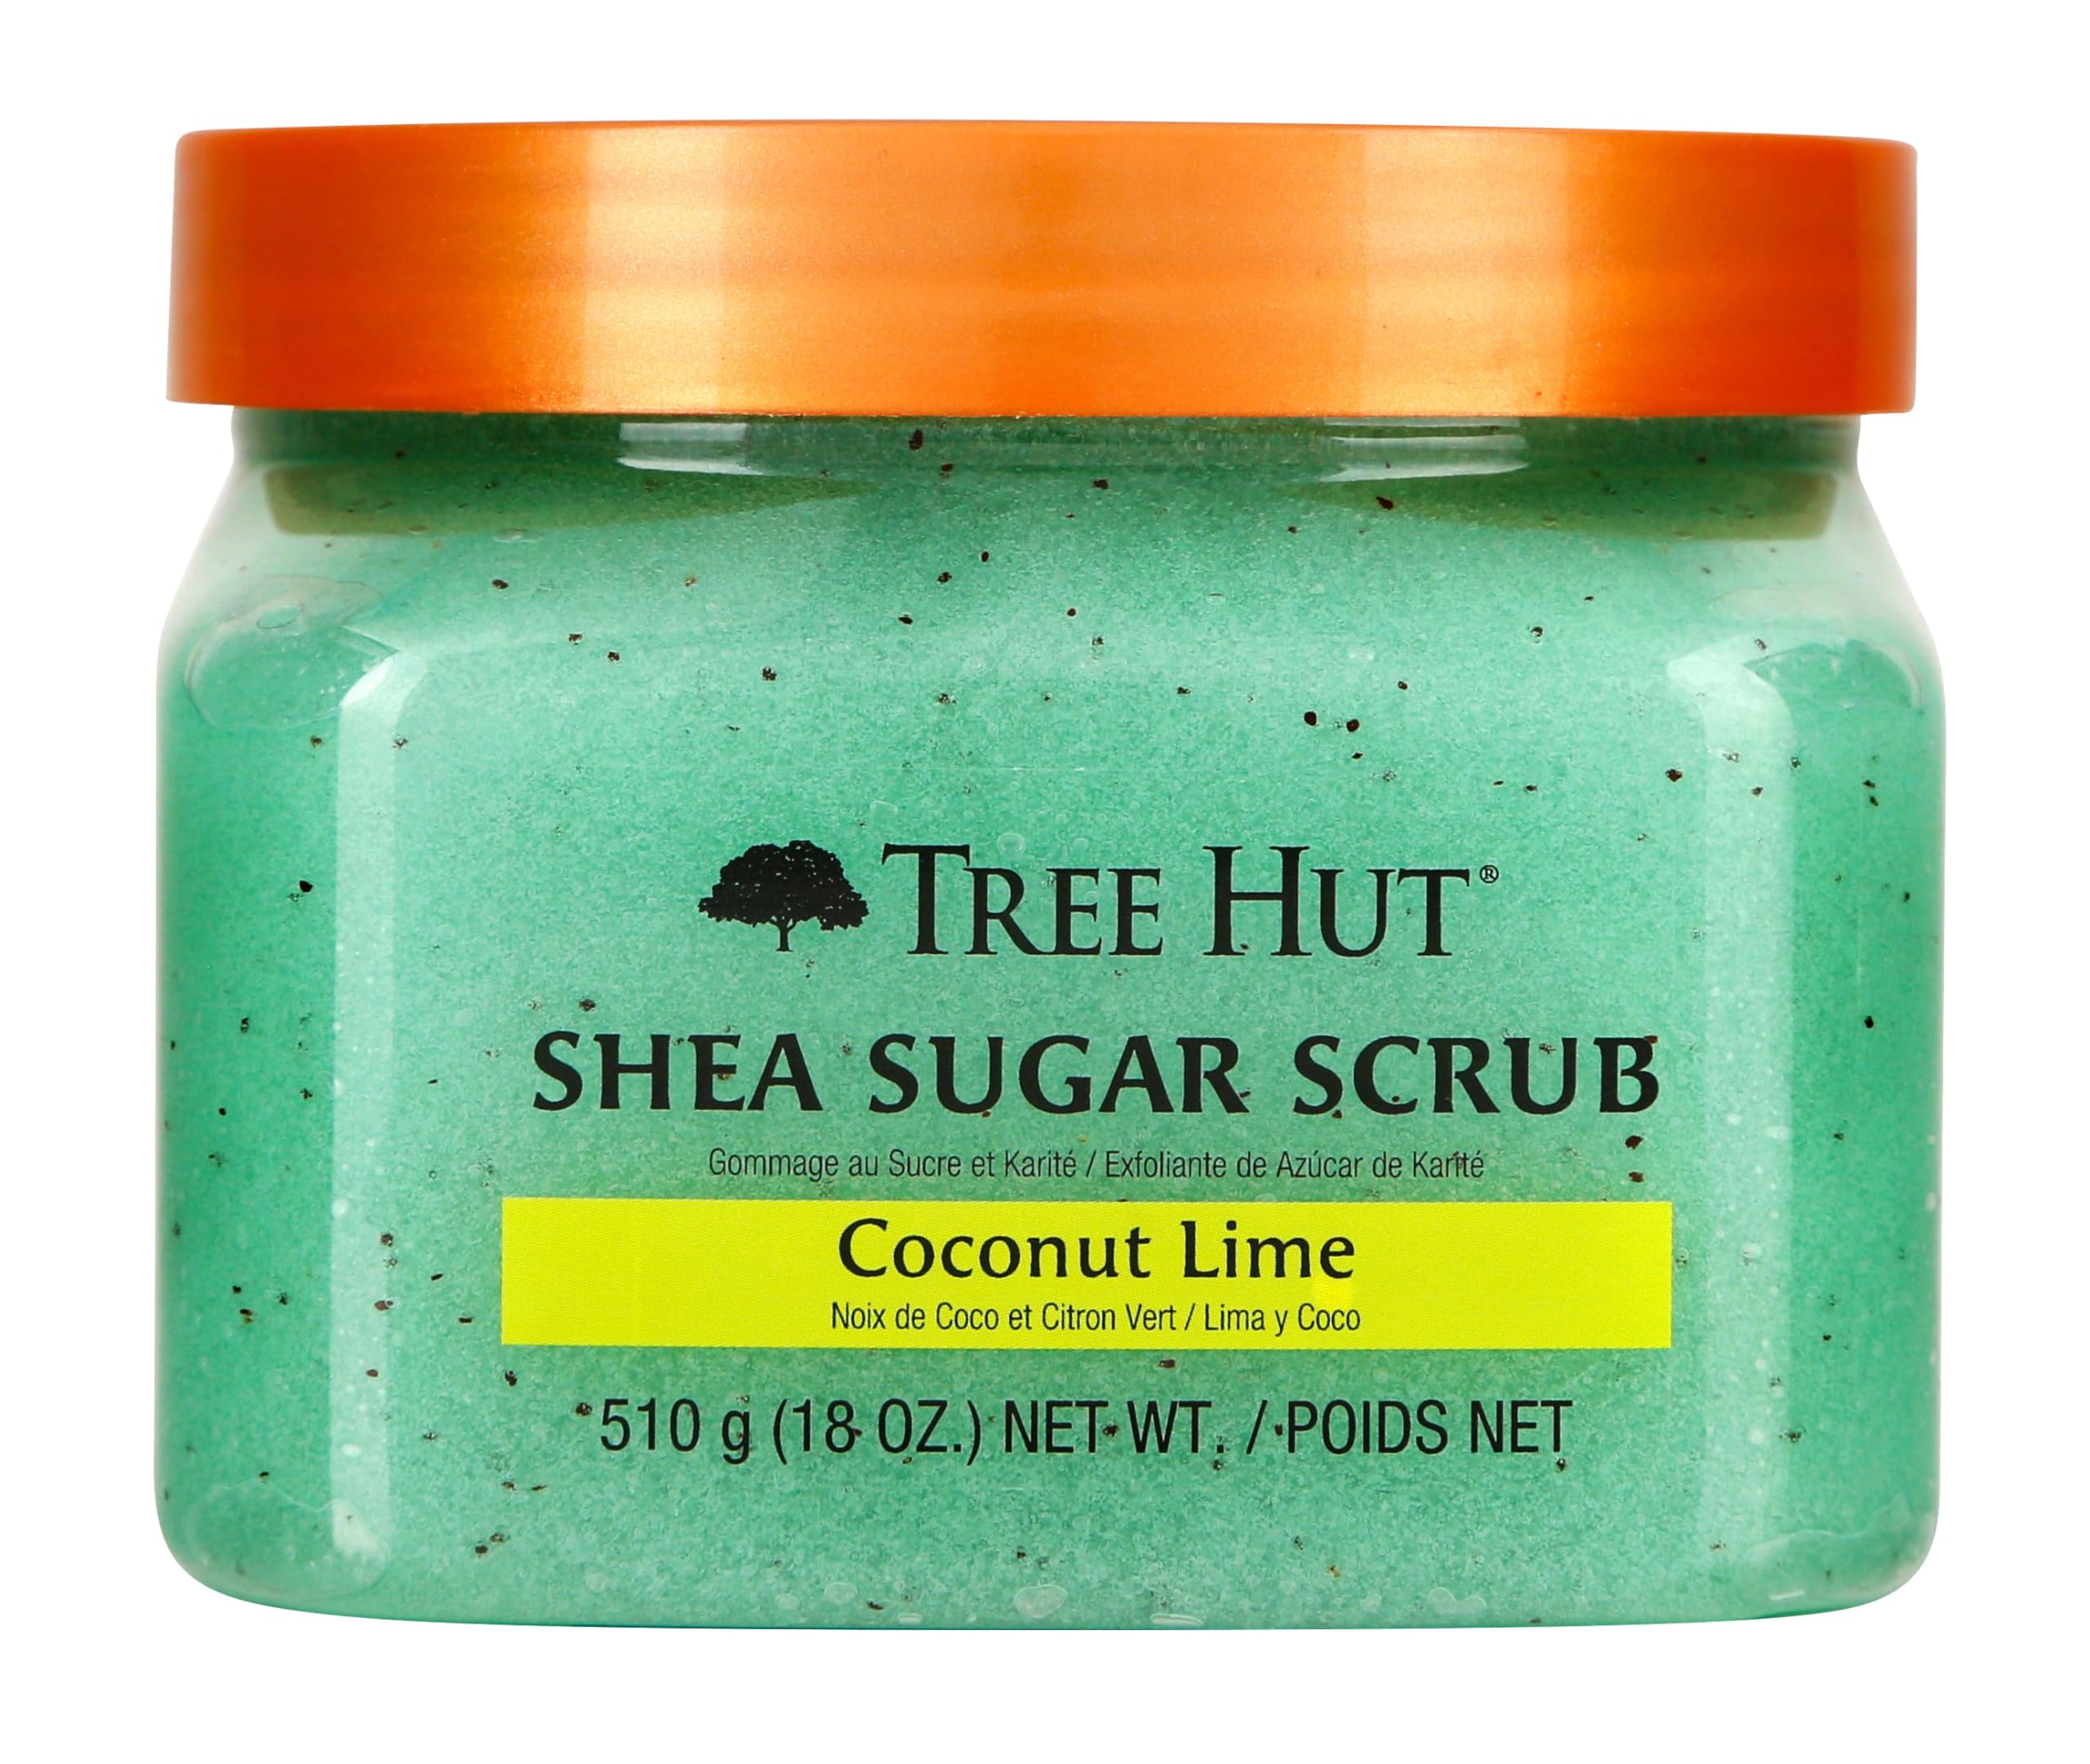 18-Oz Tree Hut Shea Sugar Body Scrub (Coconut Lime) $5.22 w/ S&S + Free Shipping w/ Prime or $35+